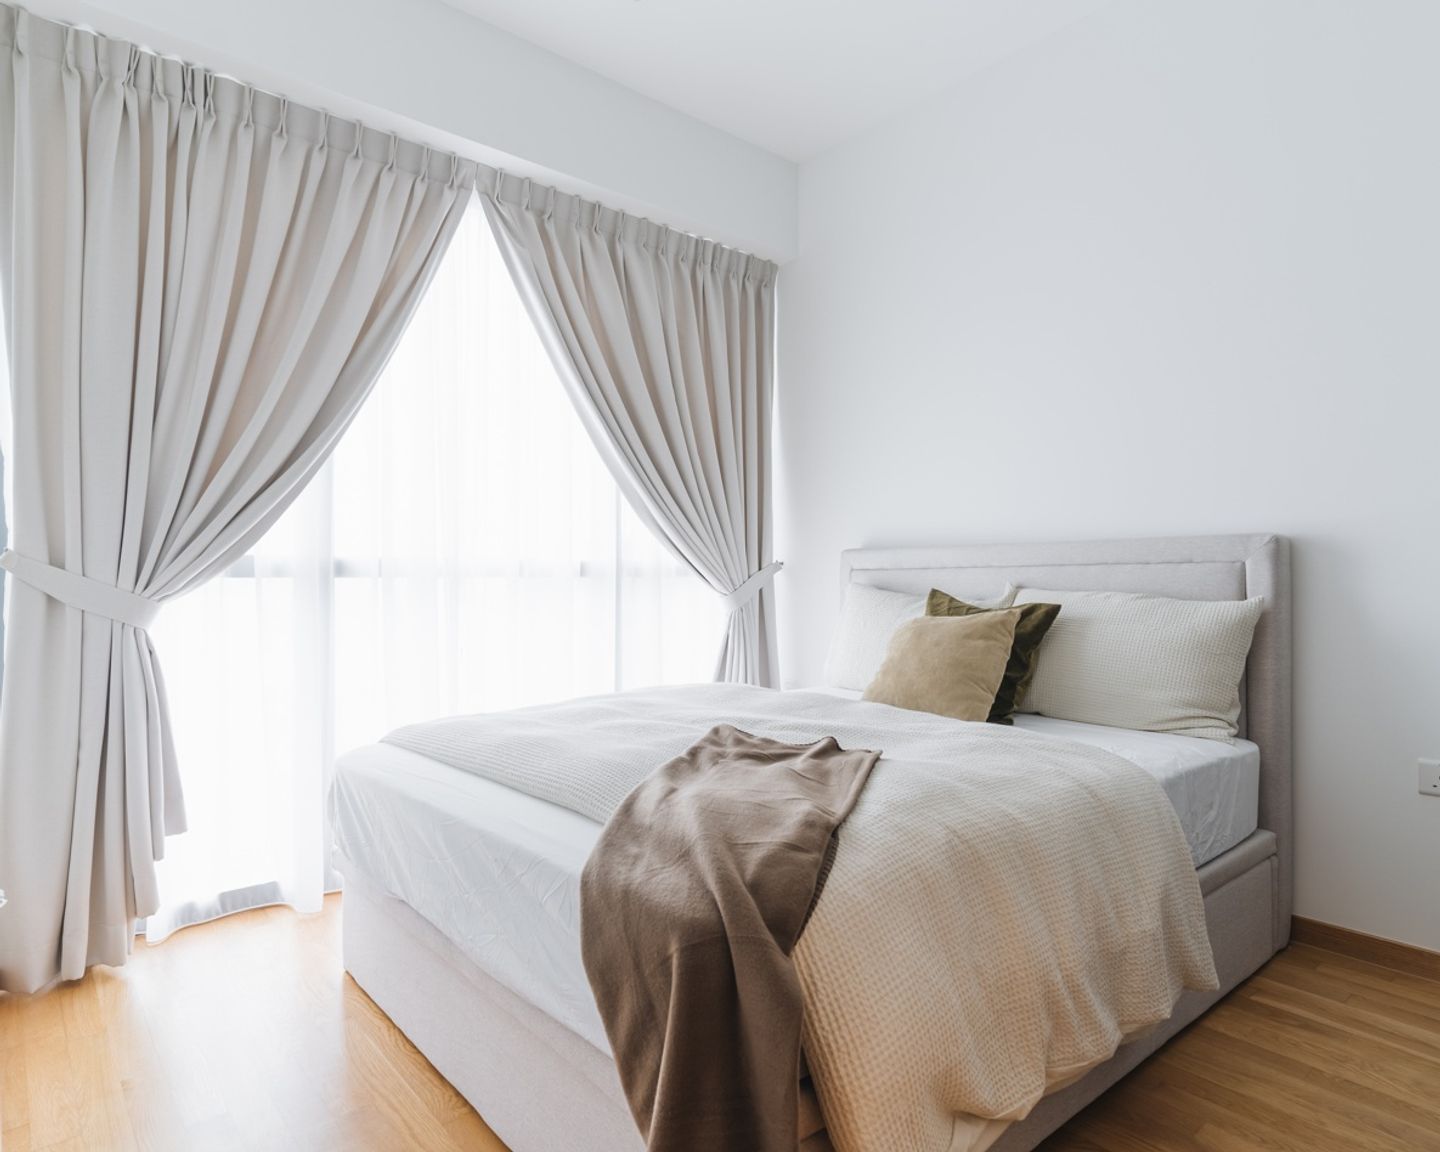 White Bedroom Design With Wooden Flooring - Livspace